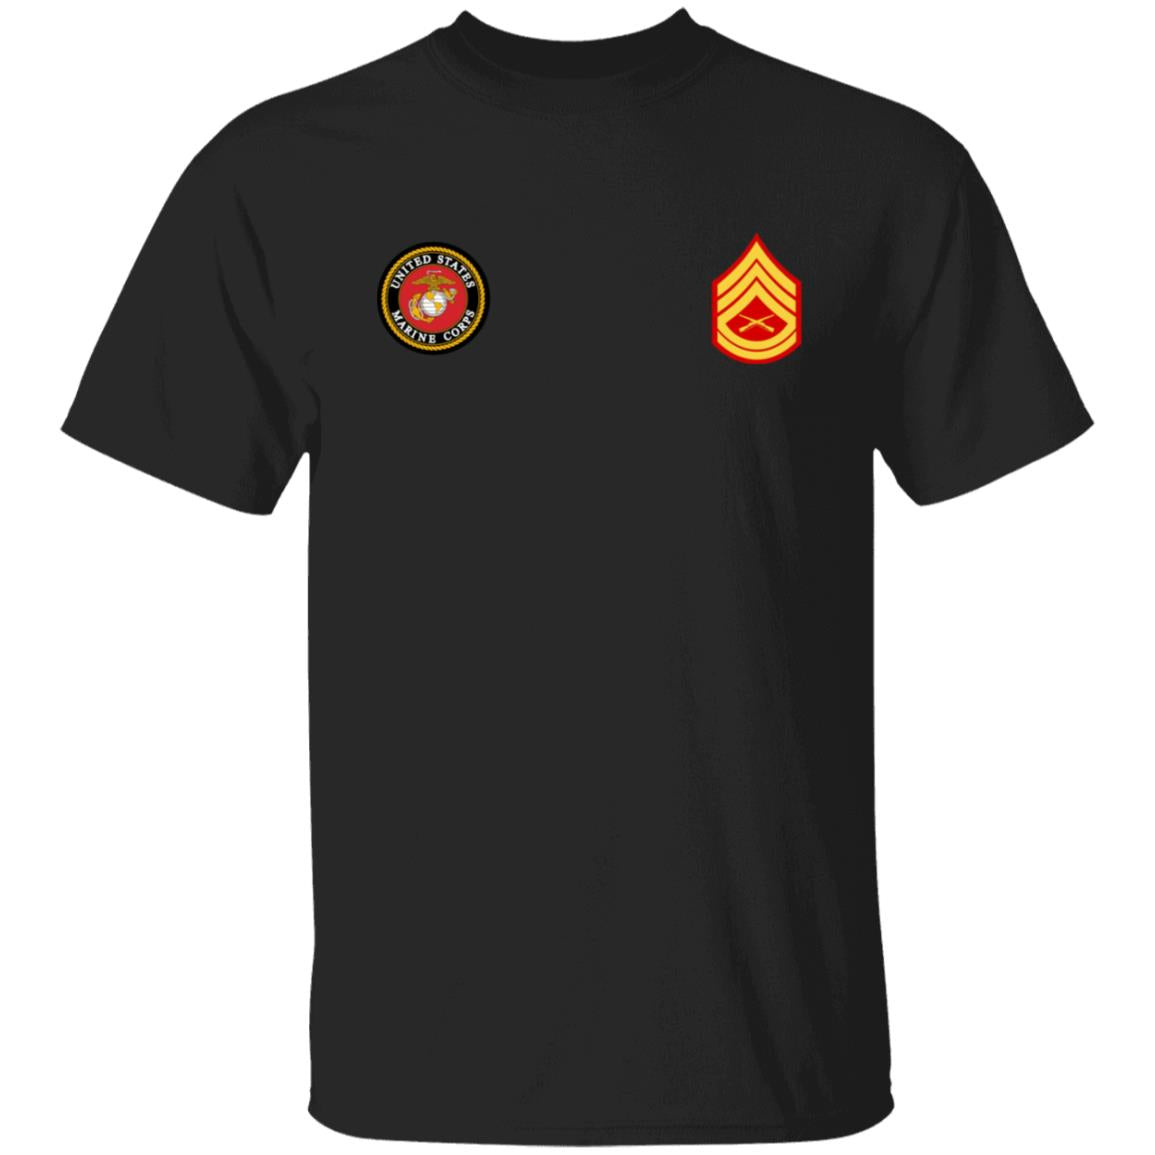 Marines Don't Die (T-Shirt)